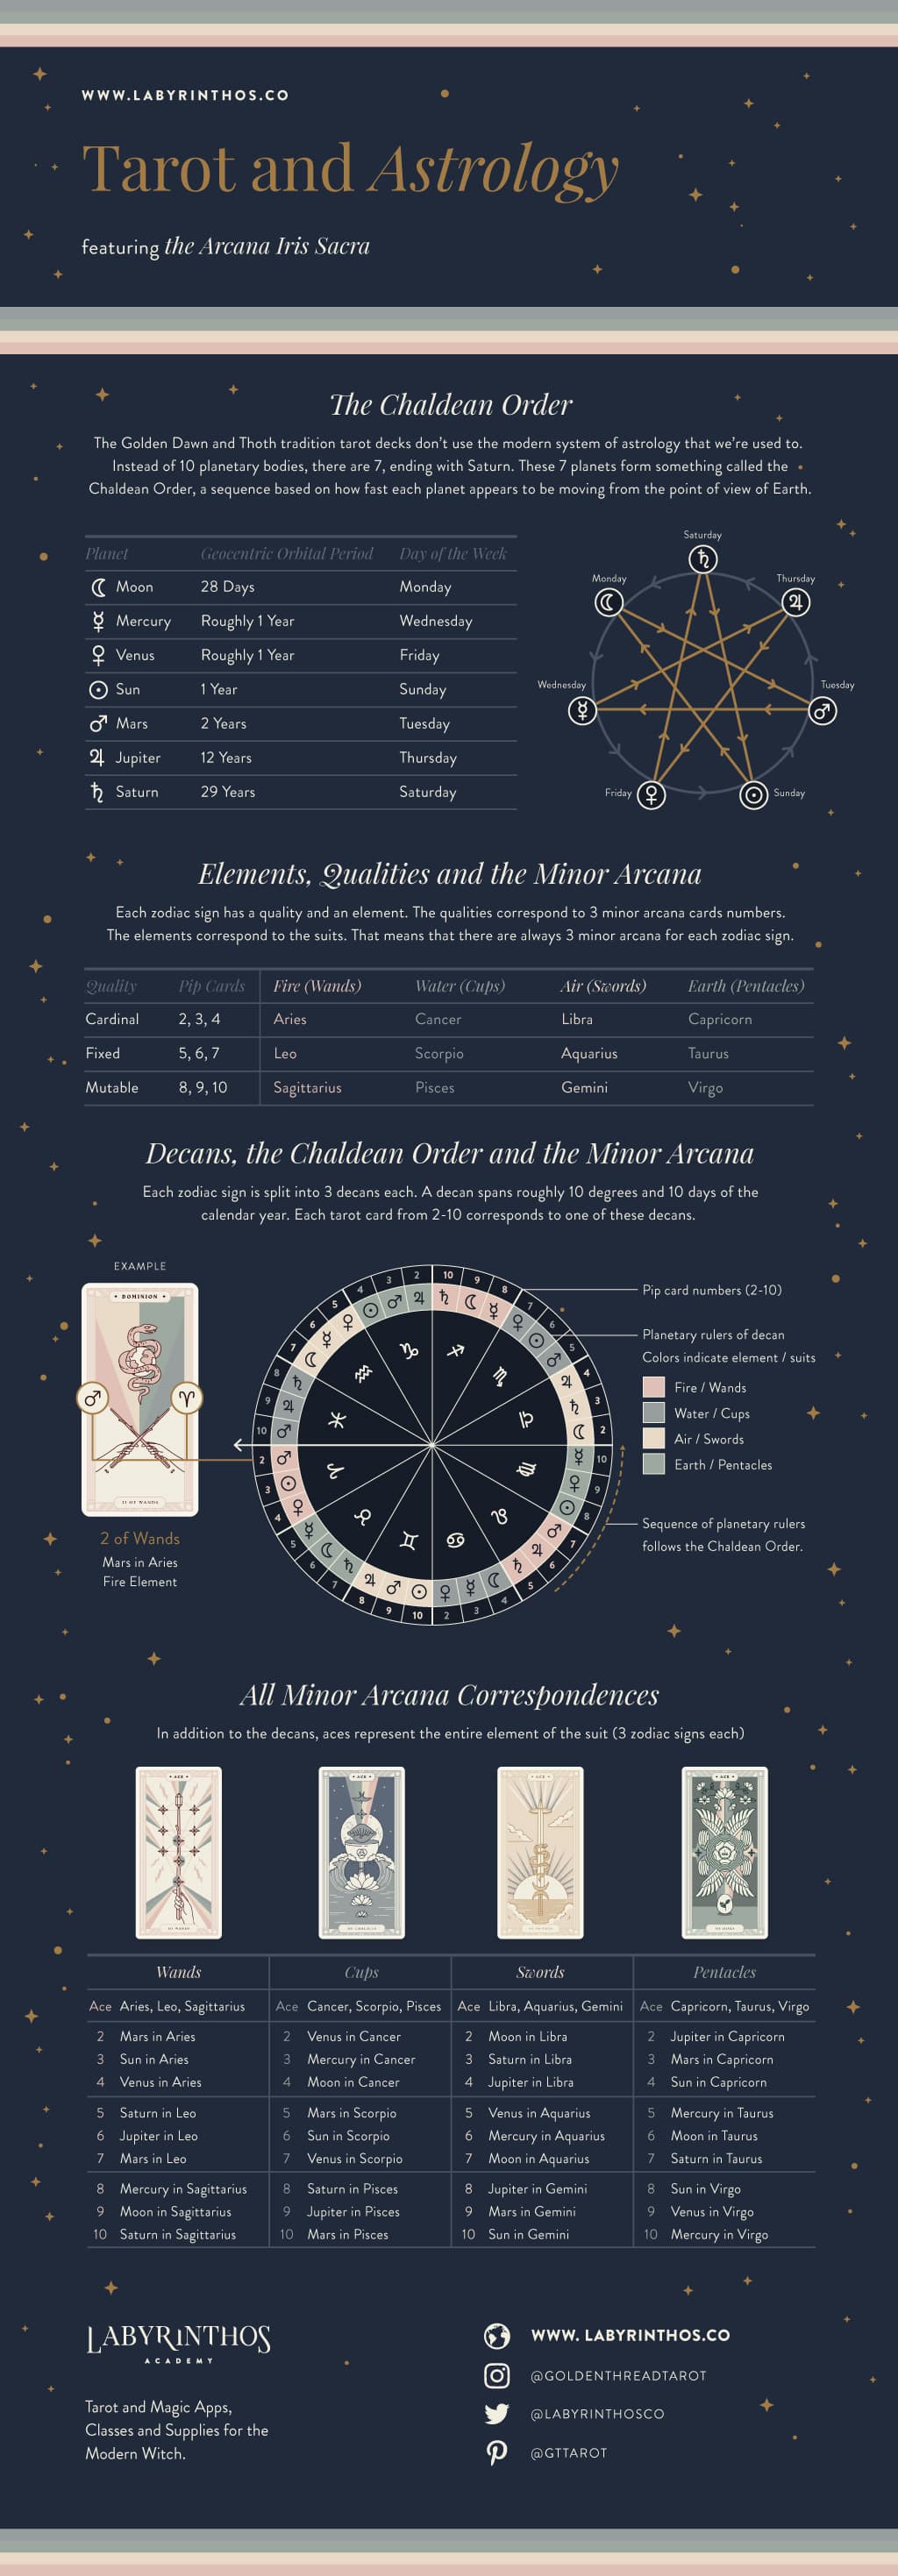 oracle cards astrology tarot